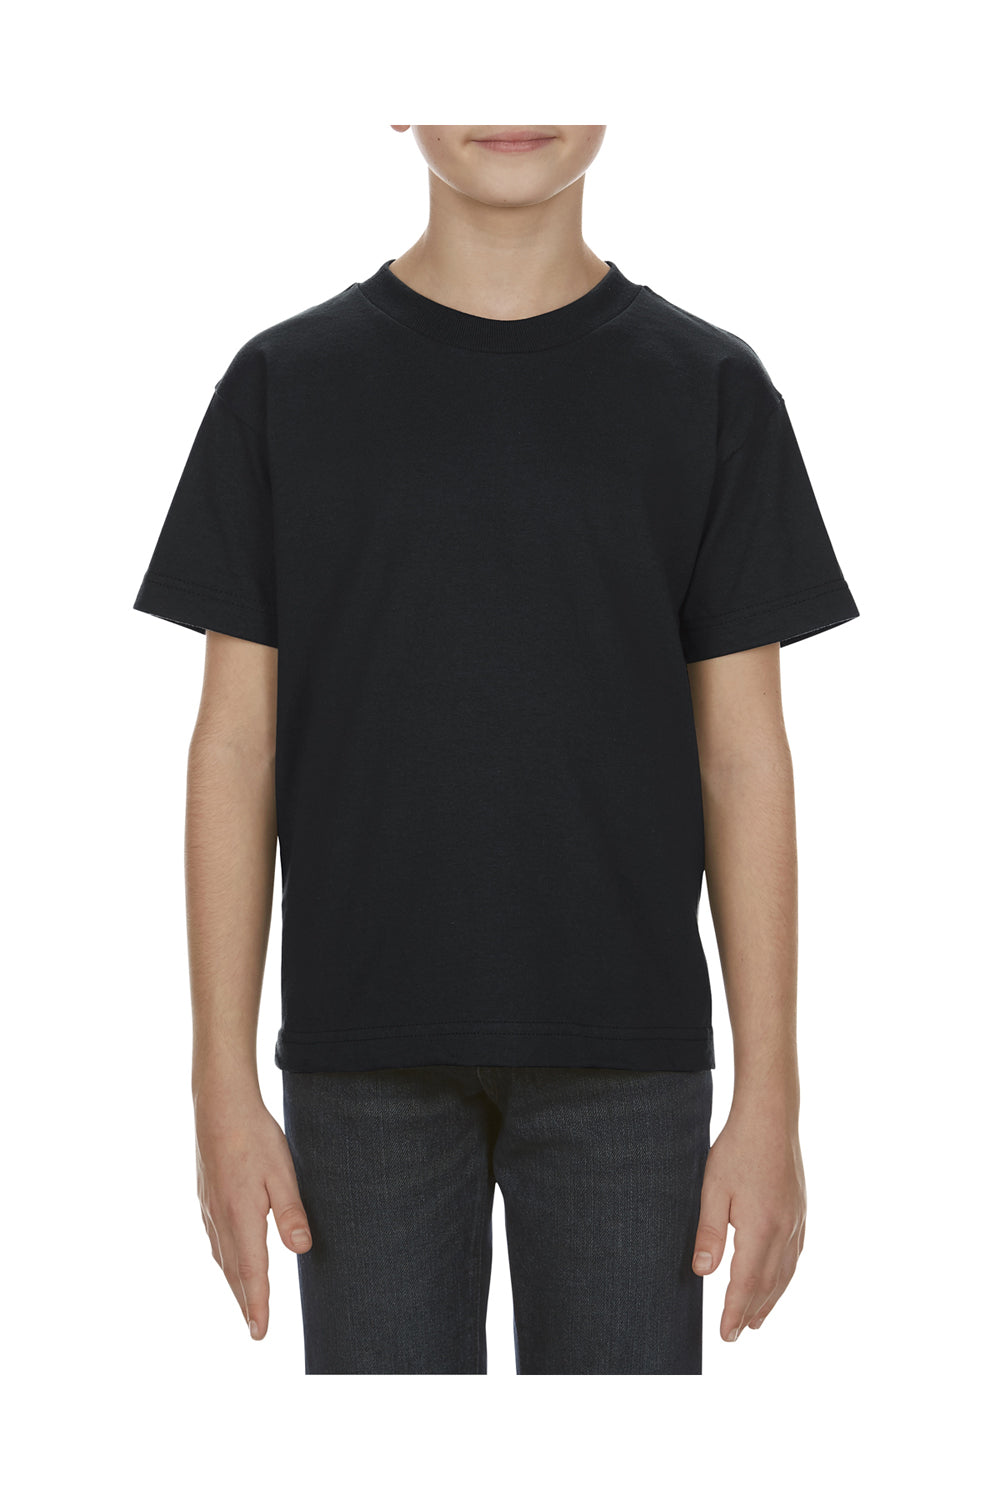 Alstyle AL3381 Youth Short Sleeve Crewneck T-Shirt Black Front